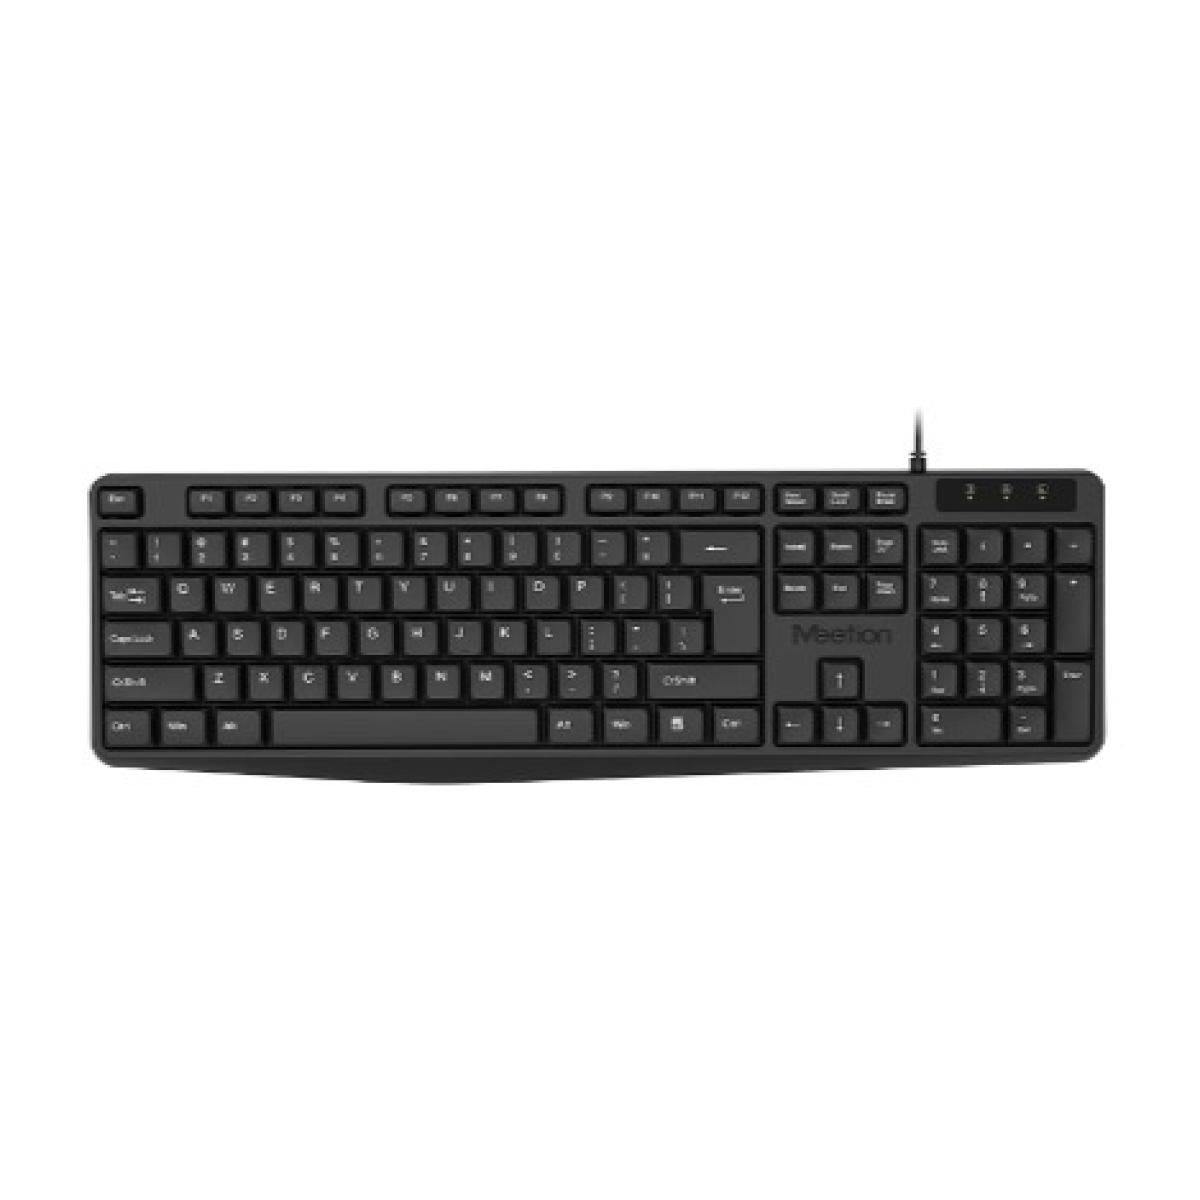 Meetion USB Standrad Corded Keyboard - Black